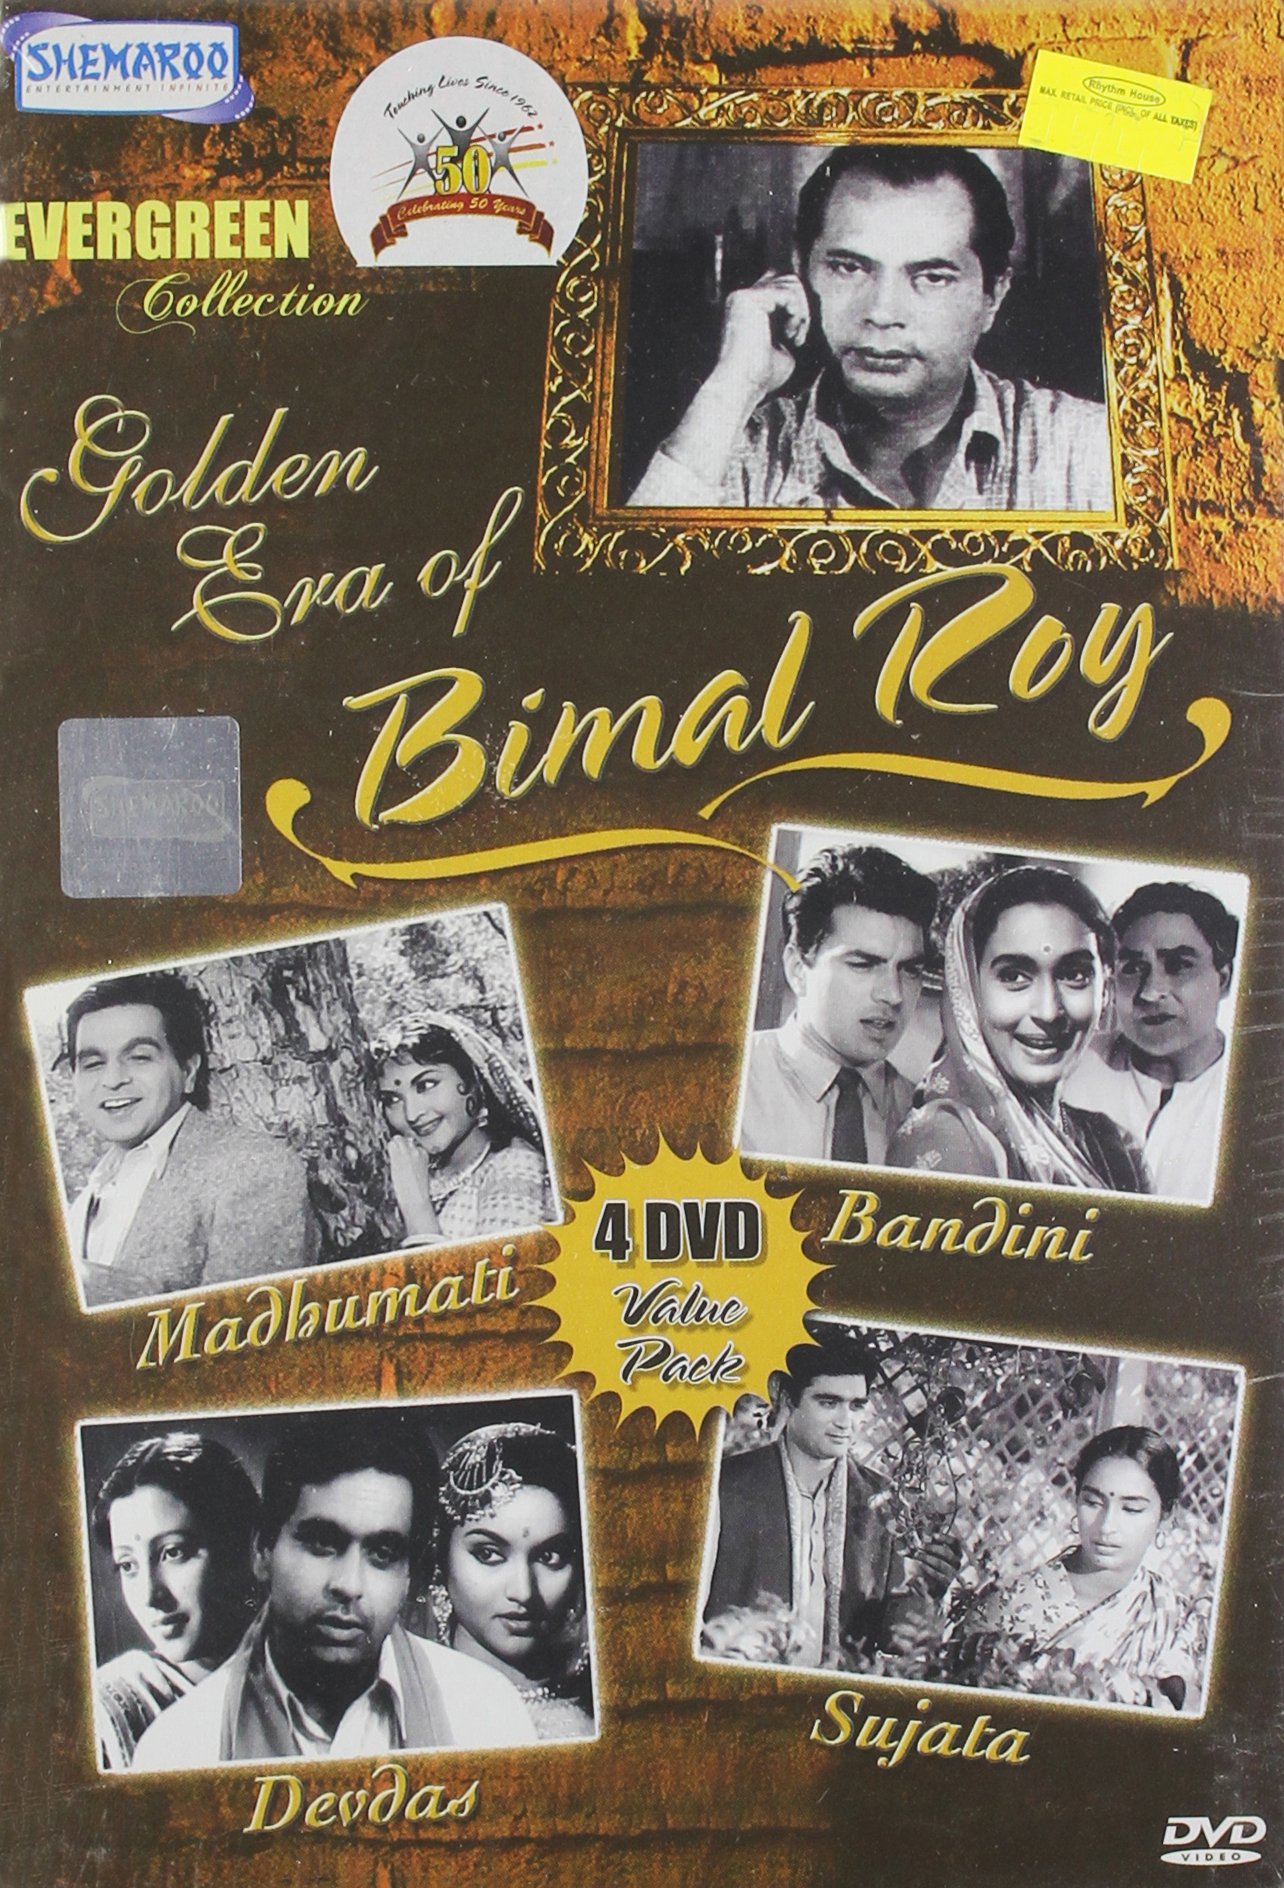 madhumati-1958-bandini-1963-devdas-1955-sujata-1959-evergreen-collection-golden-era-of-bimal-roy